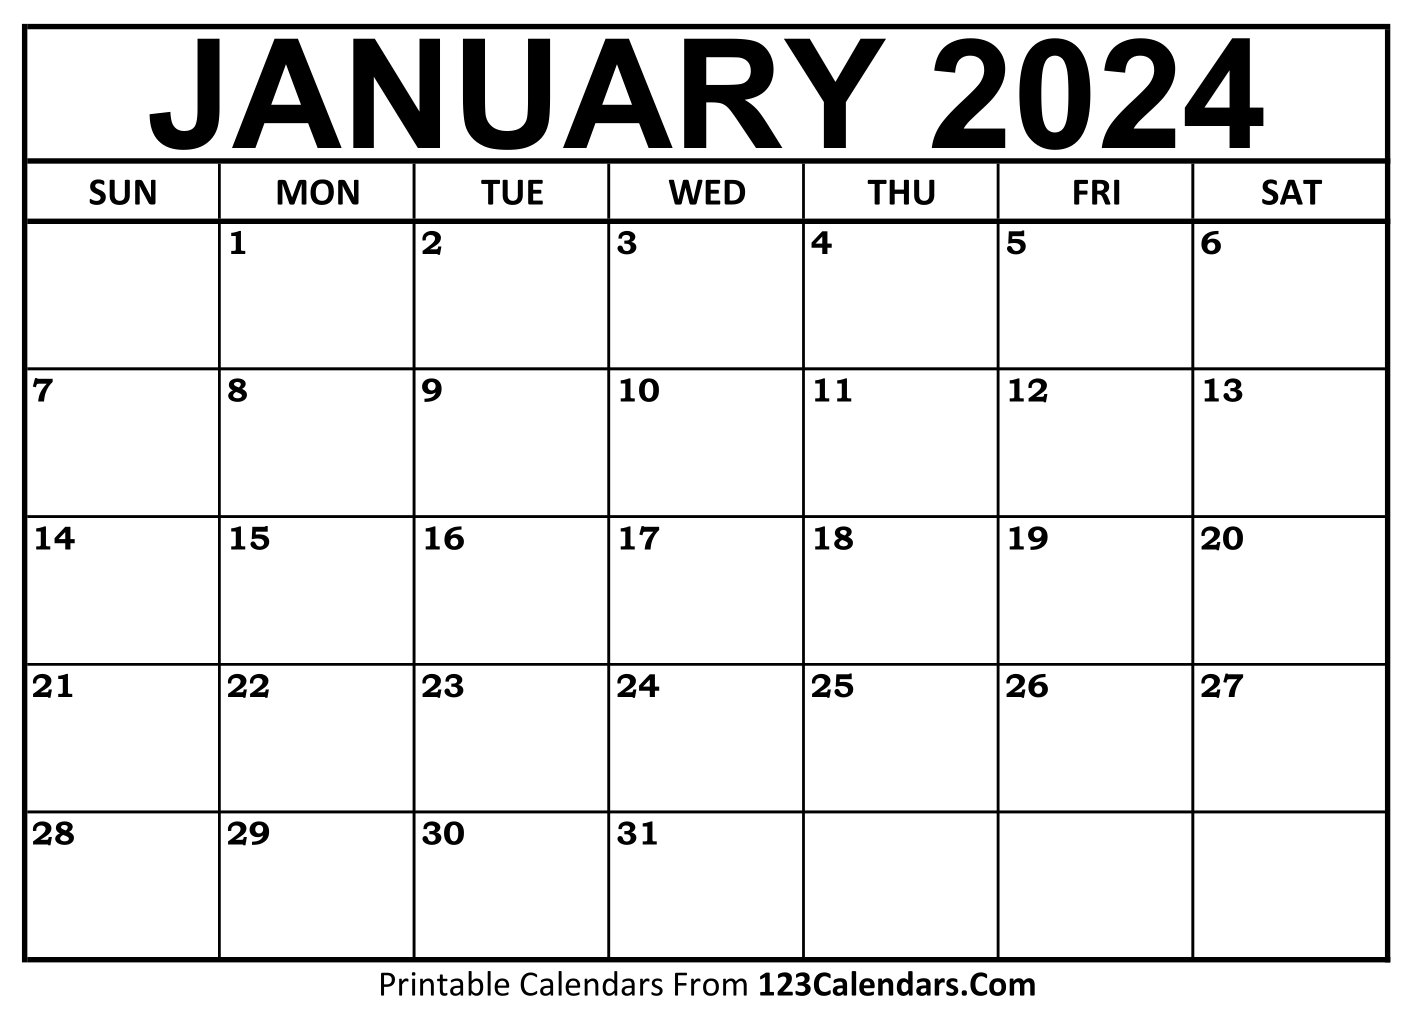 Printable Calendar January 2024 2024 Summer Solstice